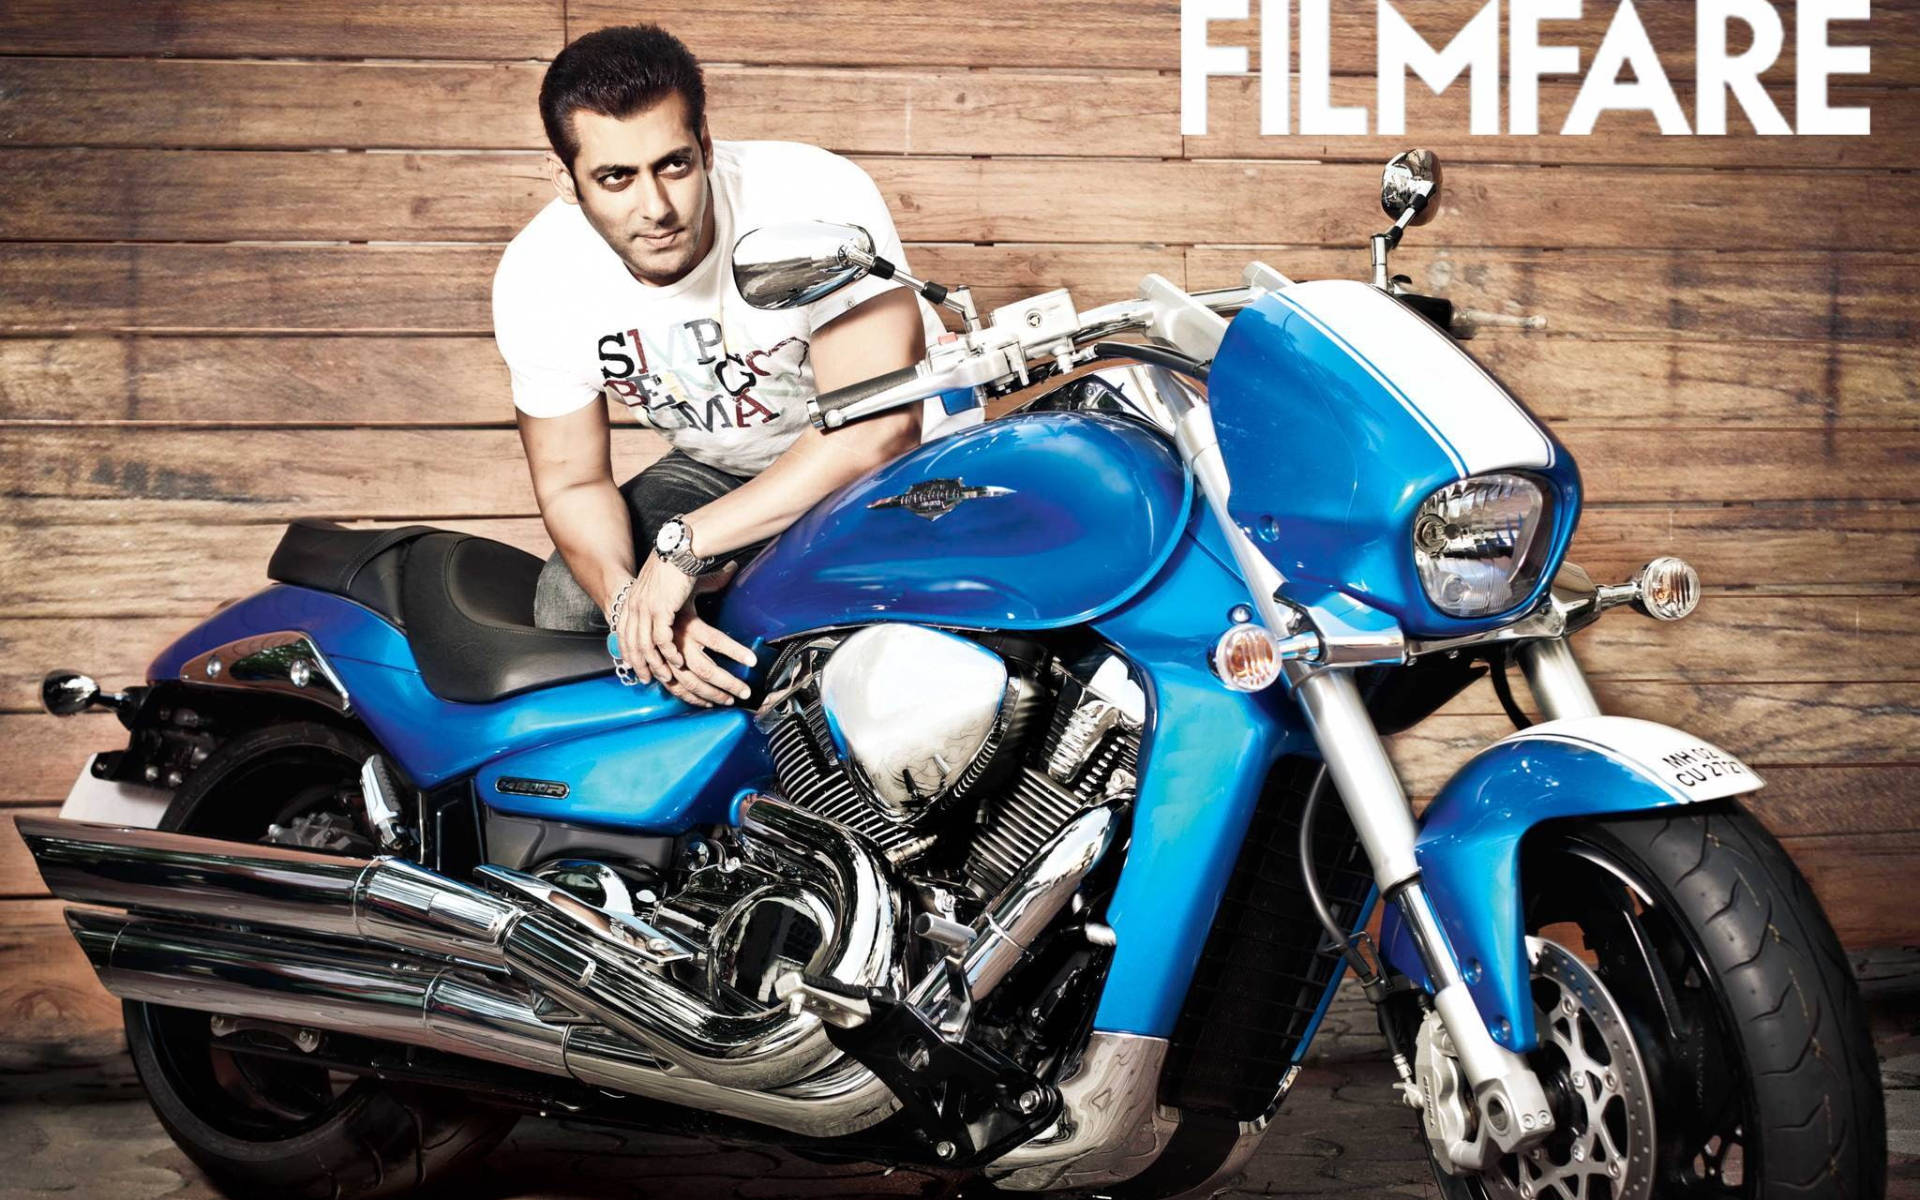 Salman Khan Filmfare Magazine Background